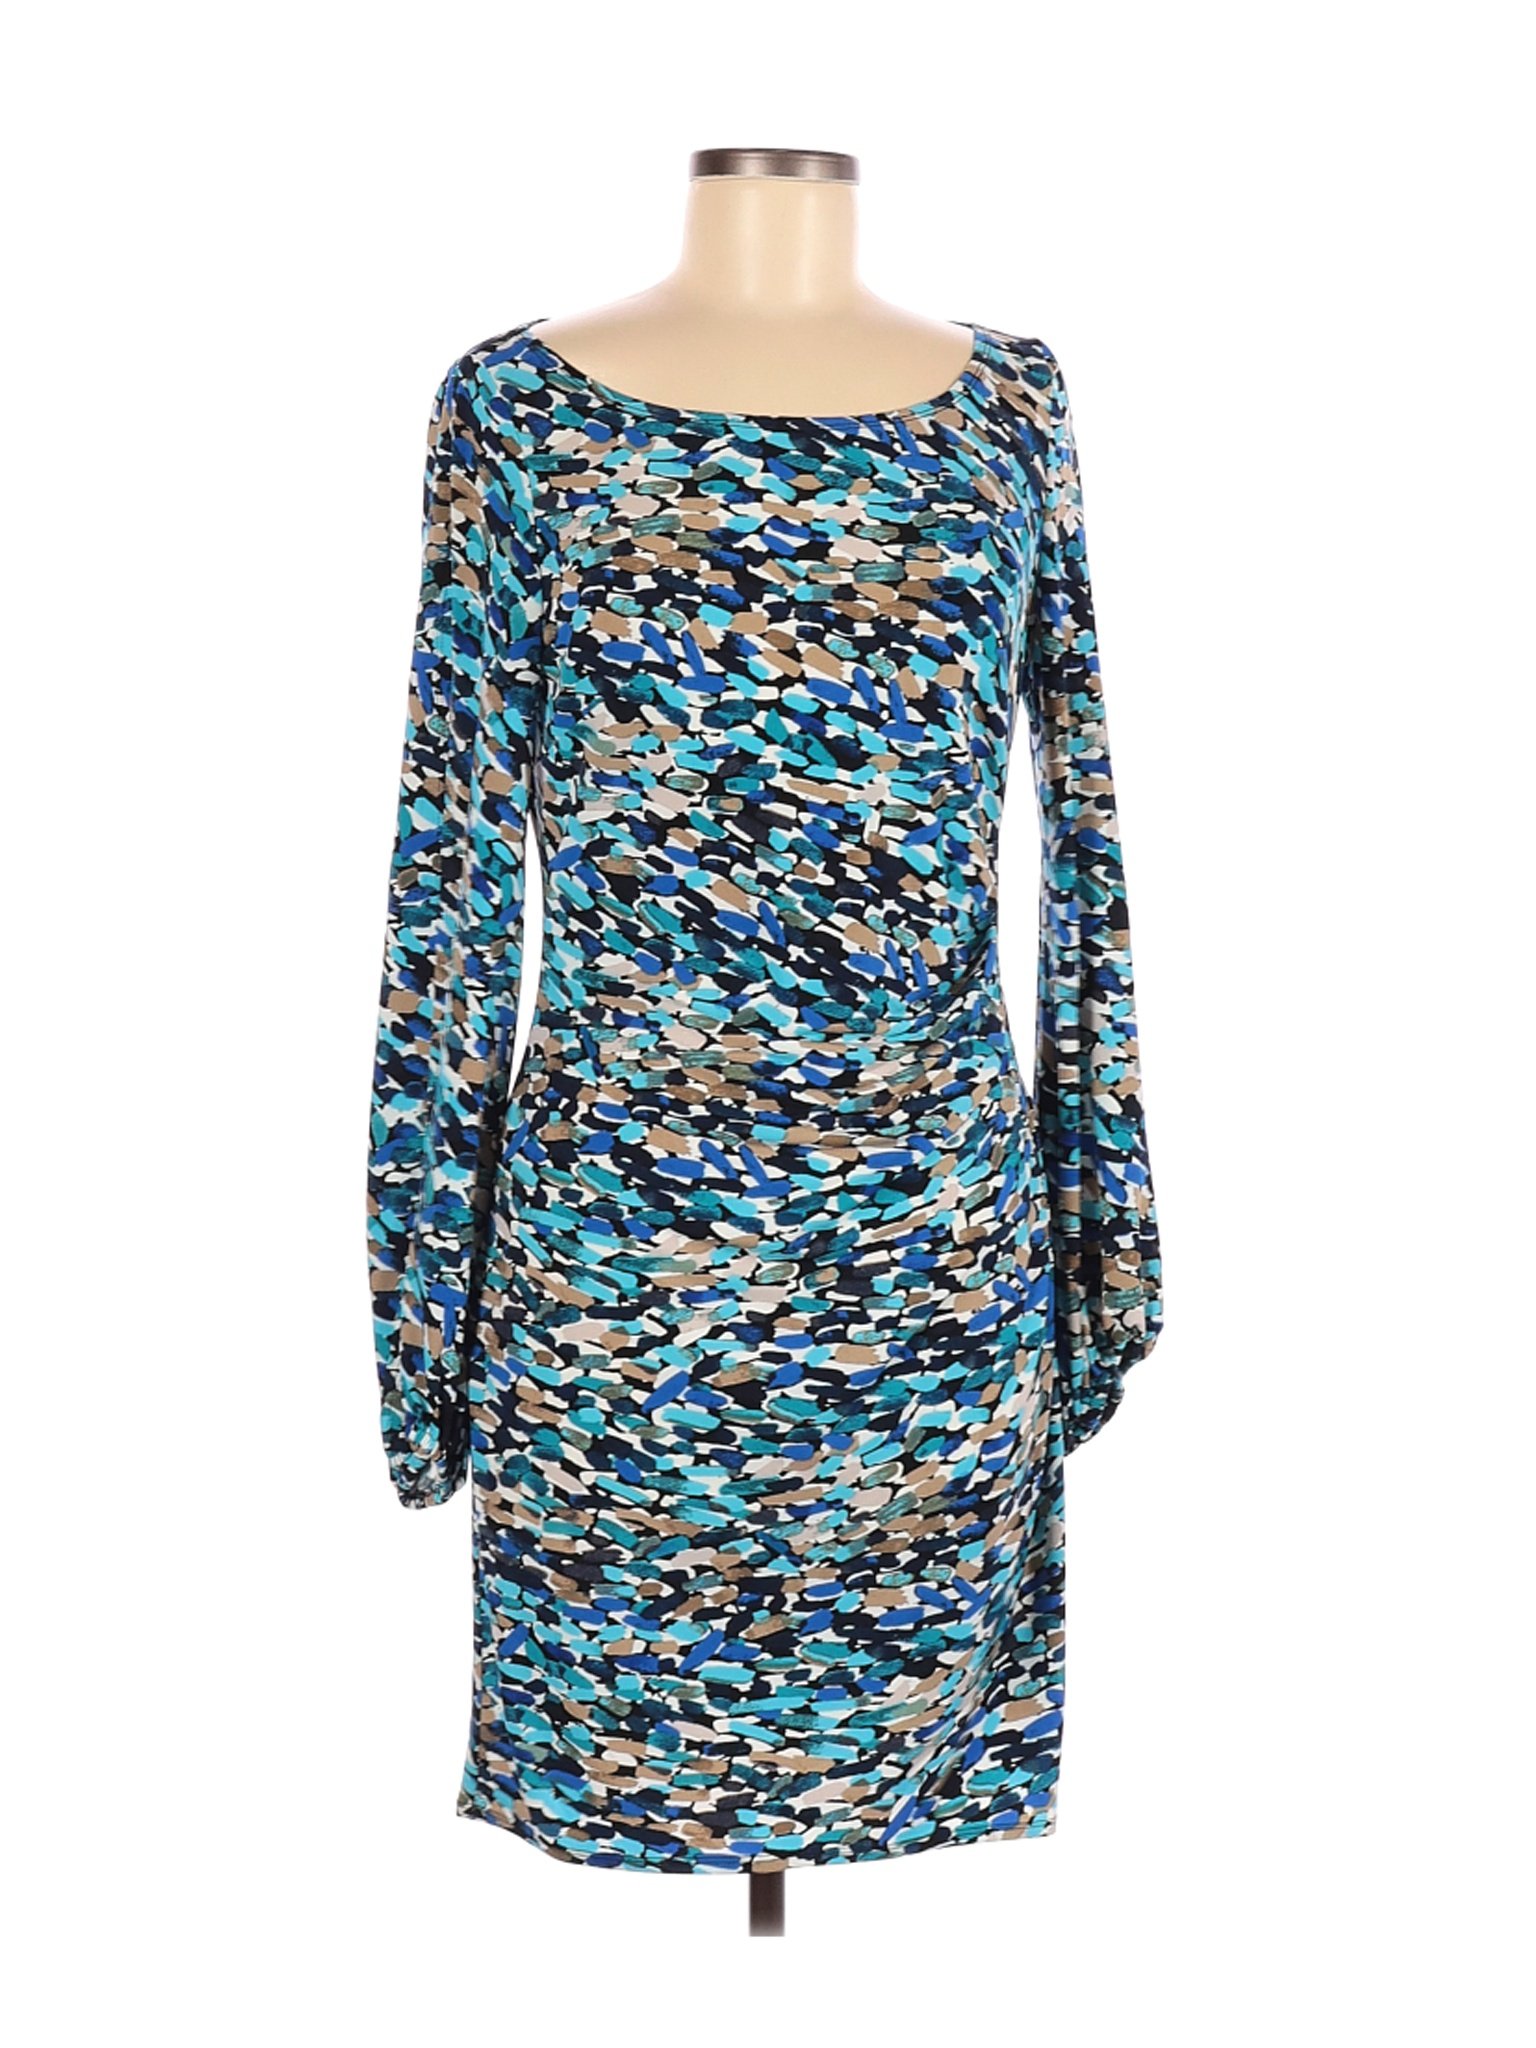 Laundry by Design Women Blue Casual Dress 6 | eBay